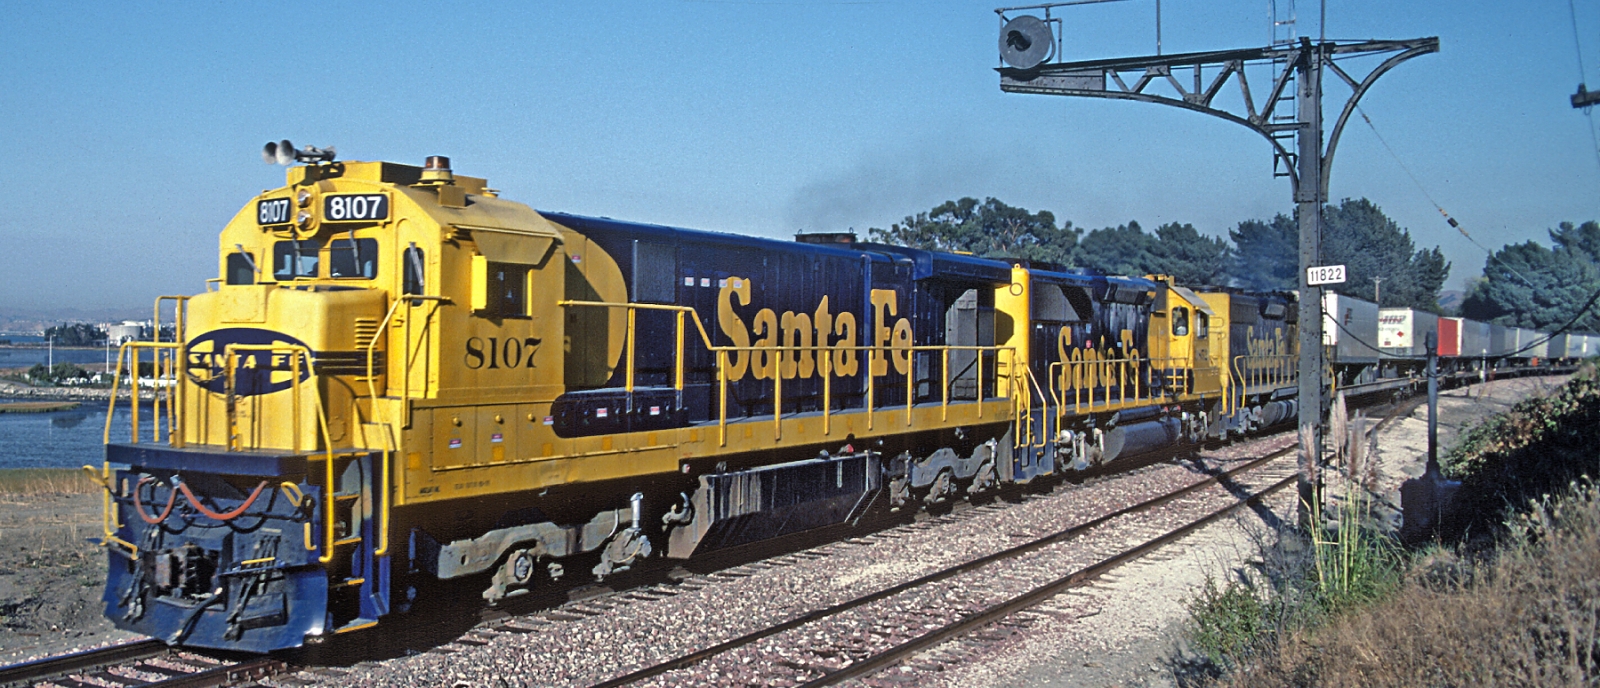 Train with Santa Fe C30-7 No. 8107 in the lead in September 1988 near Gately, California